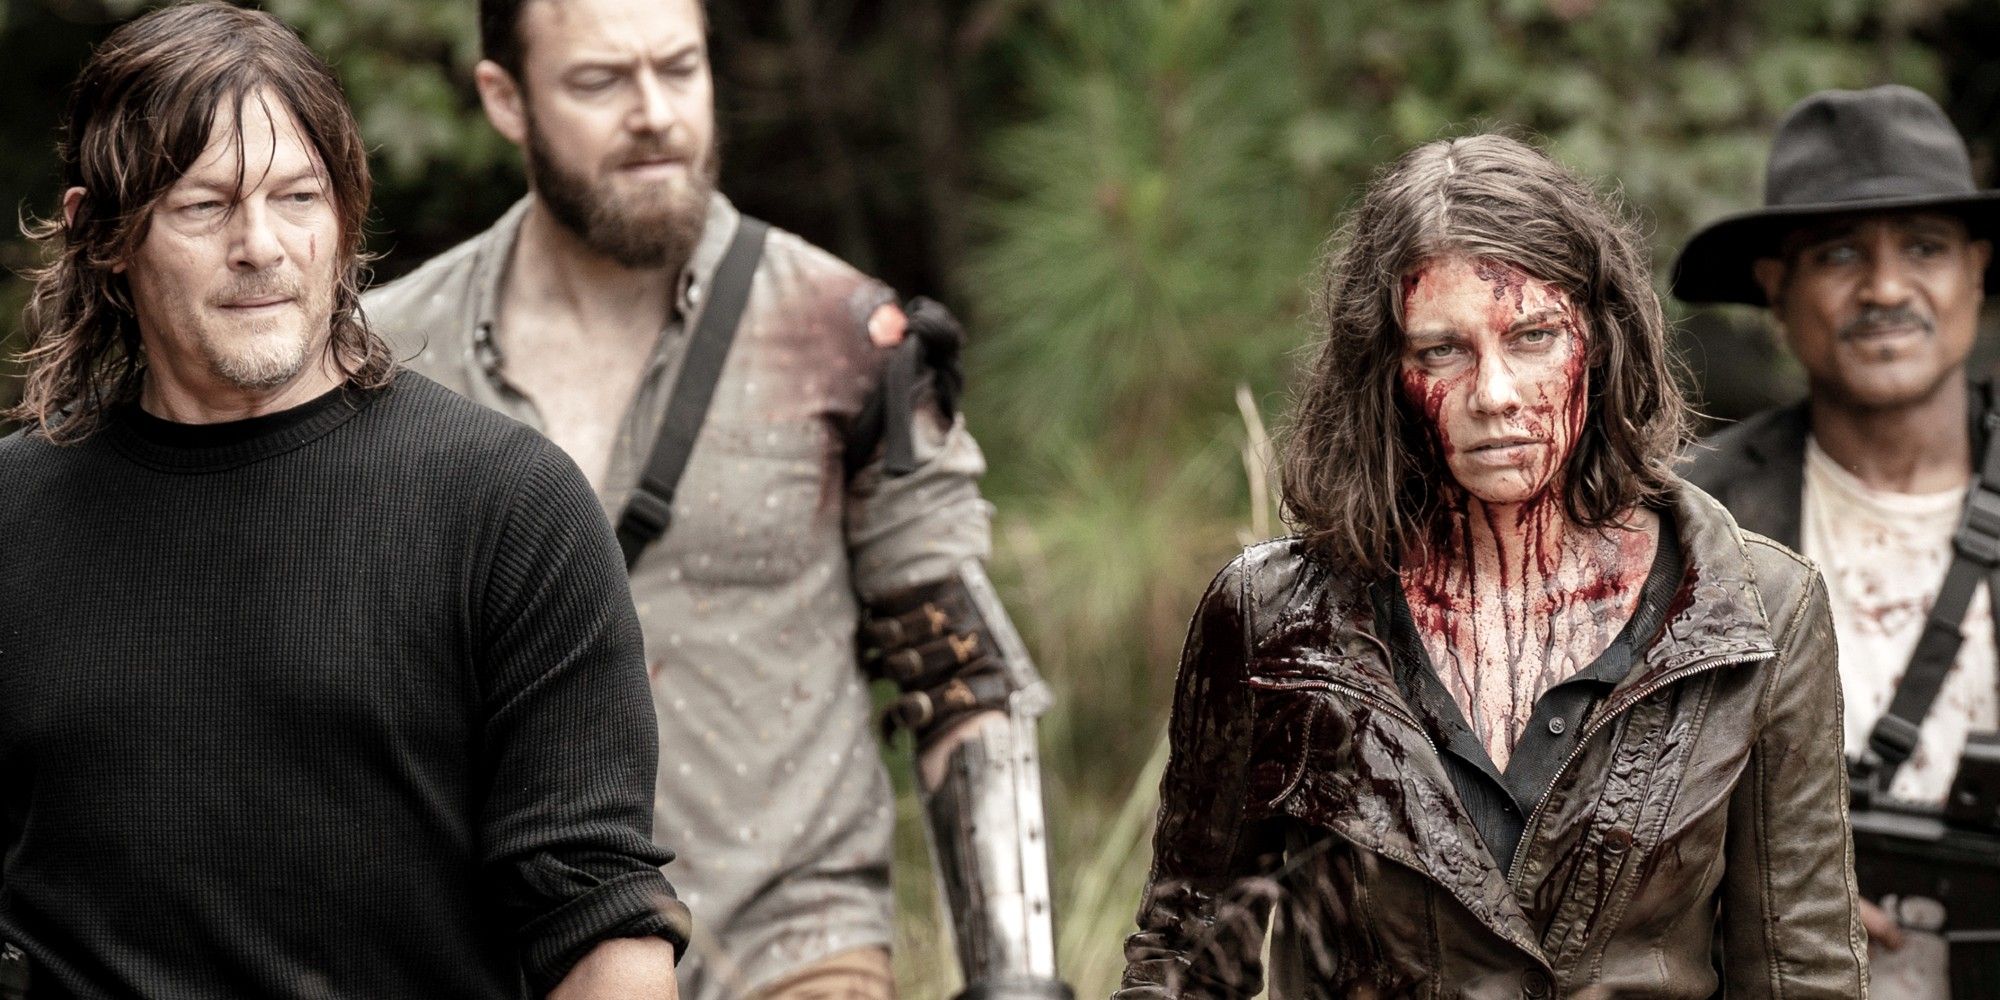 The Walking Dead Norman Reedus Ross Marquand Seth Gilliam e Lauren Cohan como Daryl Aaron Gabriel e Maggie